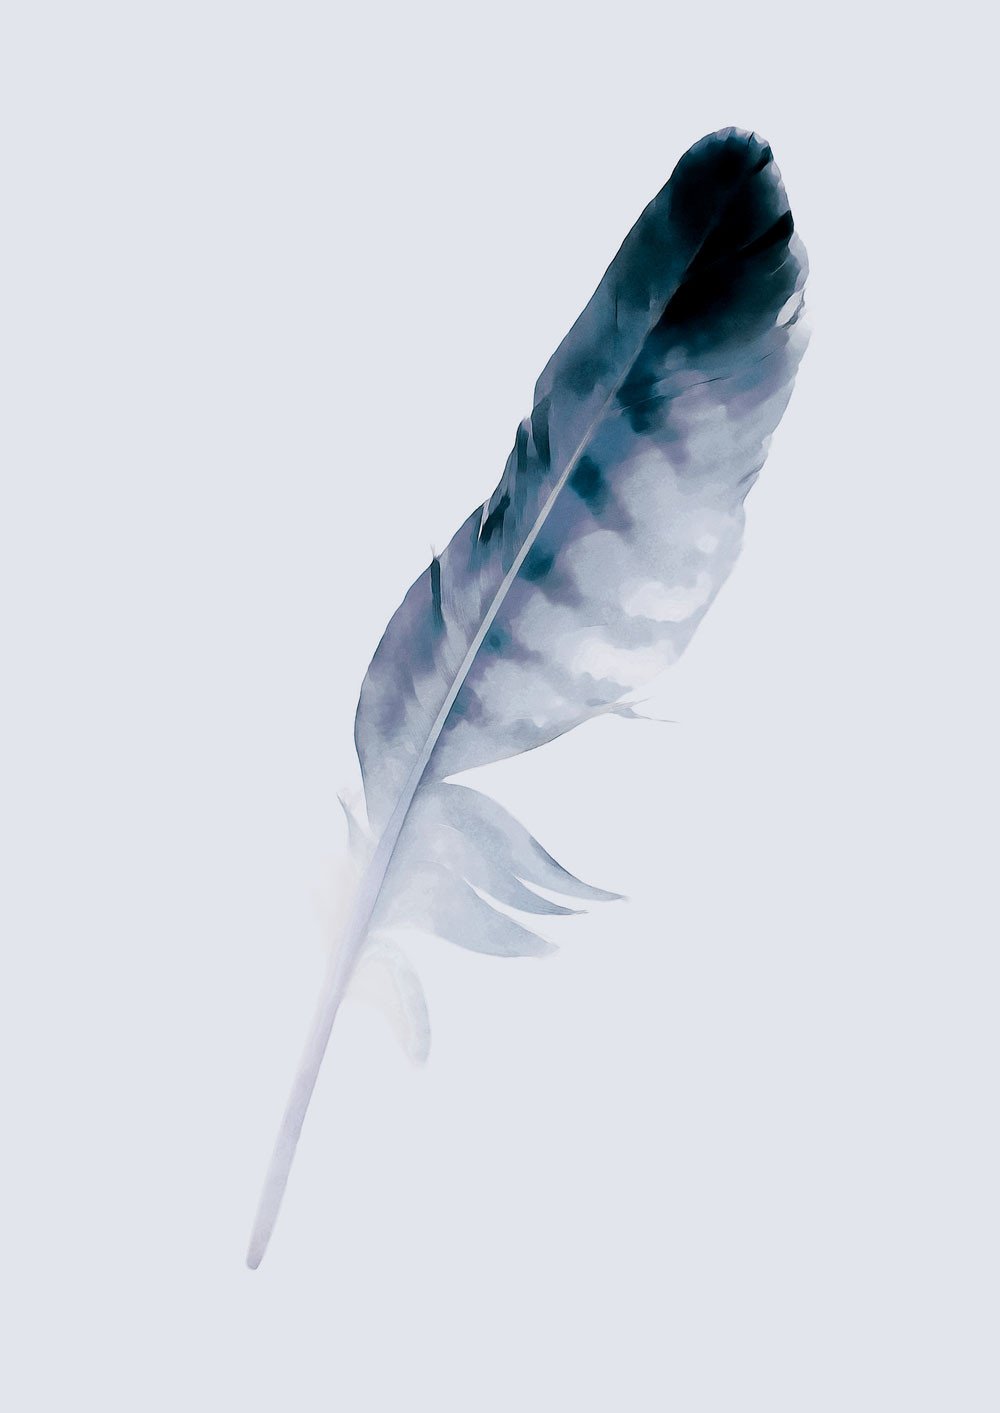 Falcon Feather